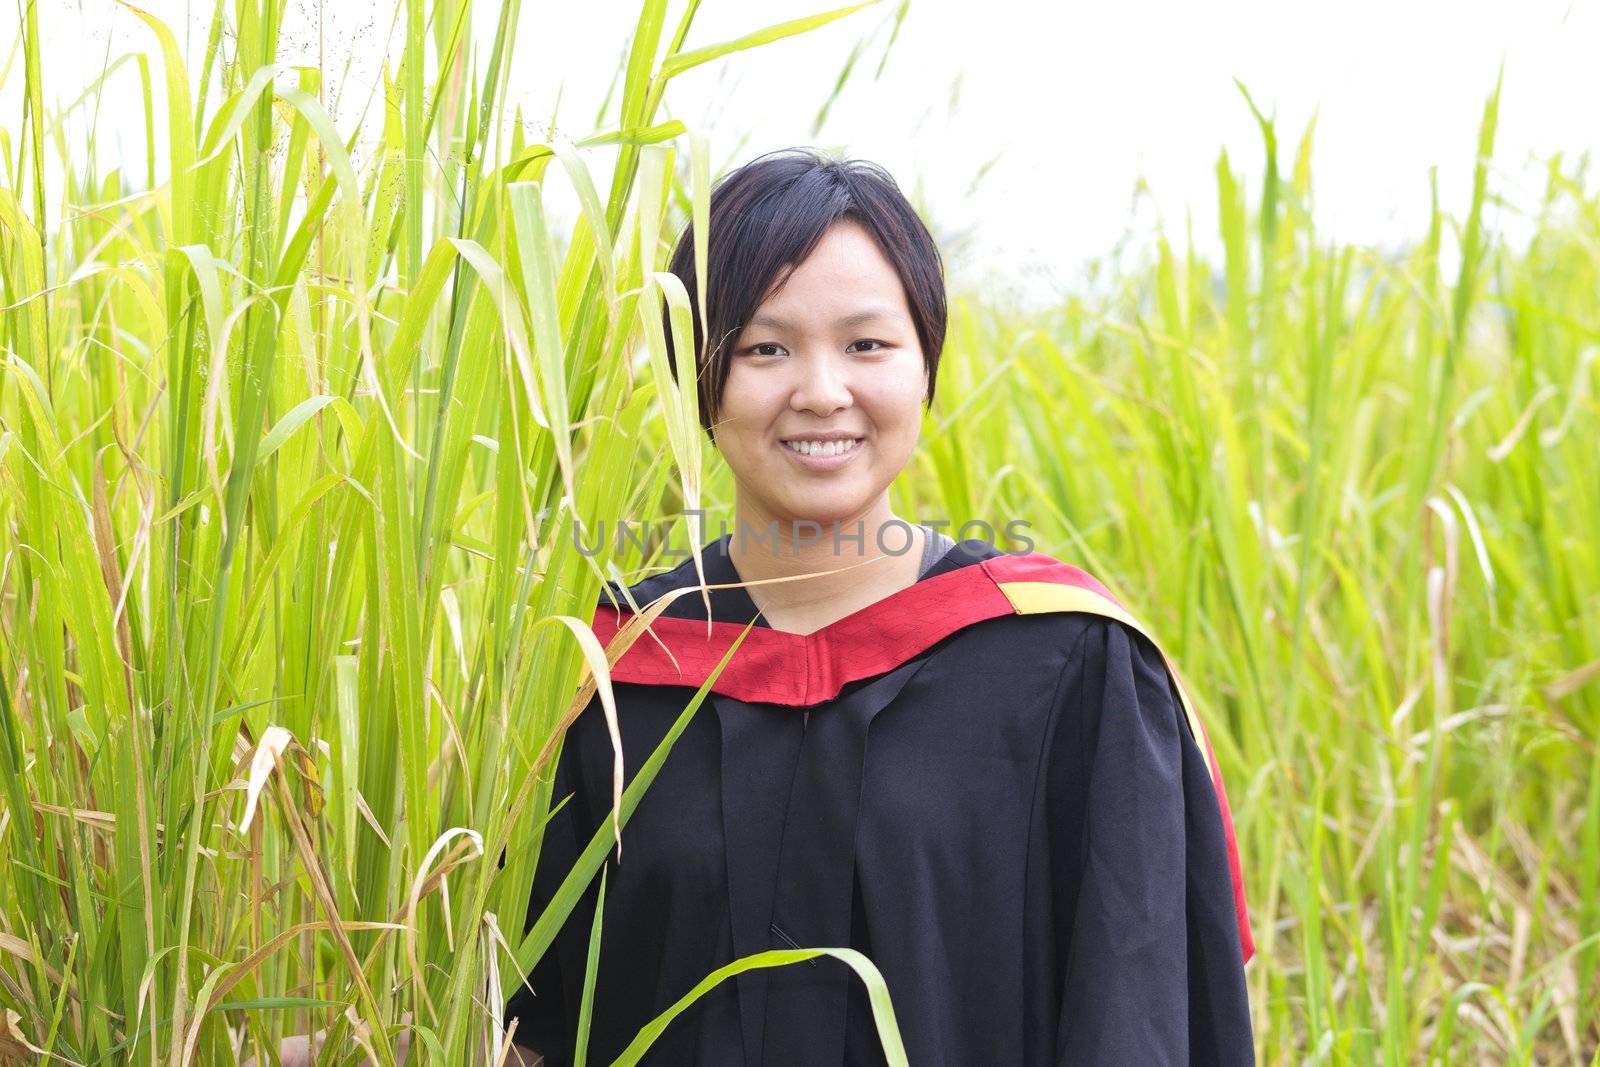 Asian woman graduation by kawing921